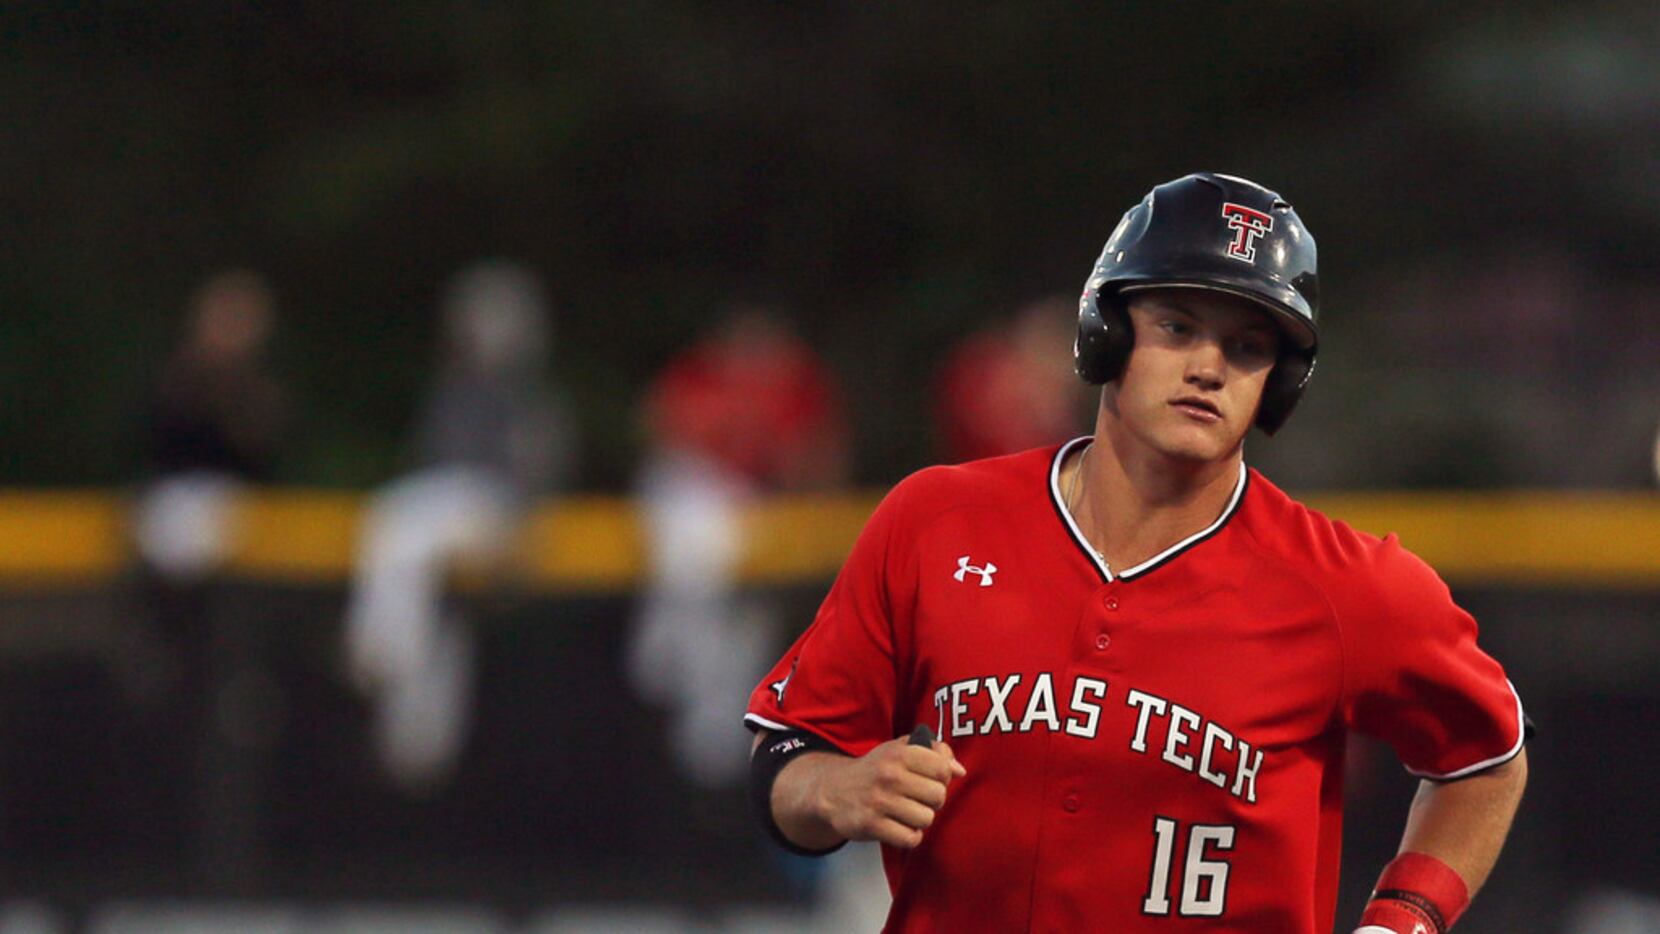 Texas Tech's Josh Jung (16) runs the bases after hitting a home run during an NCAA college...